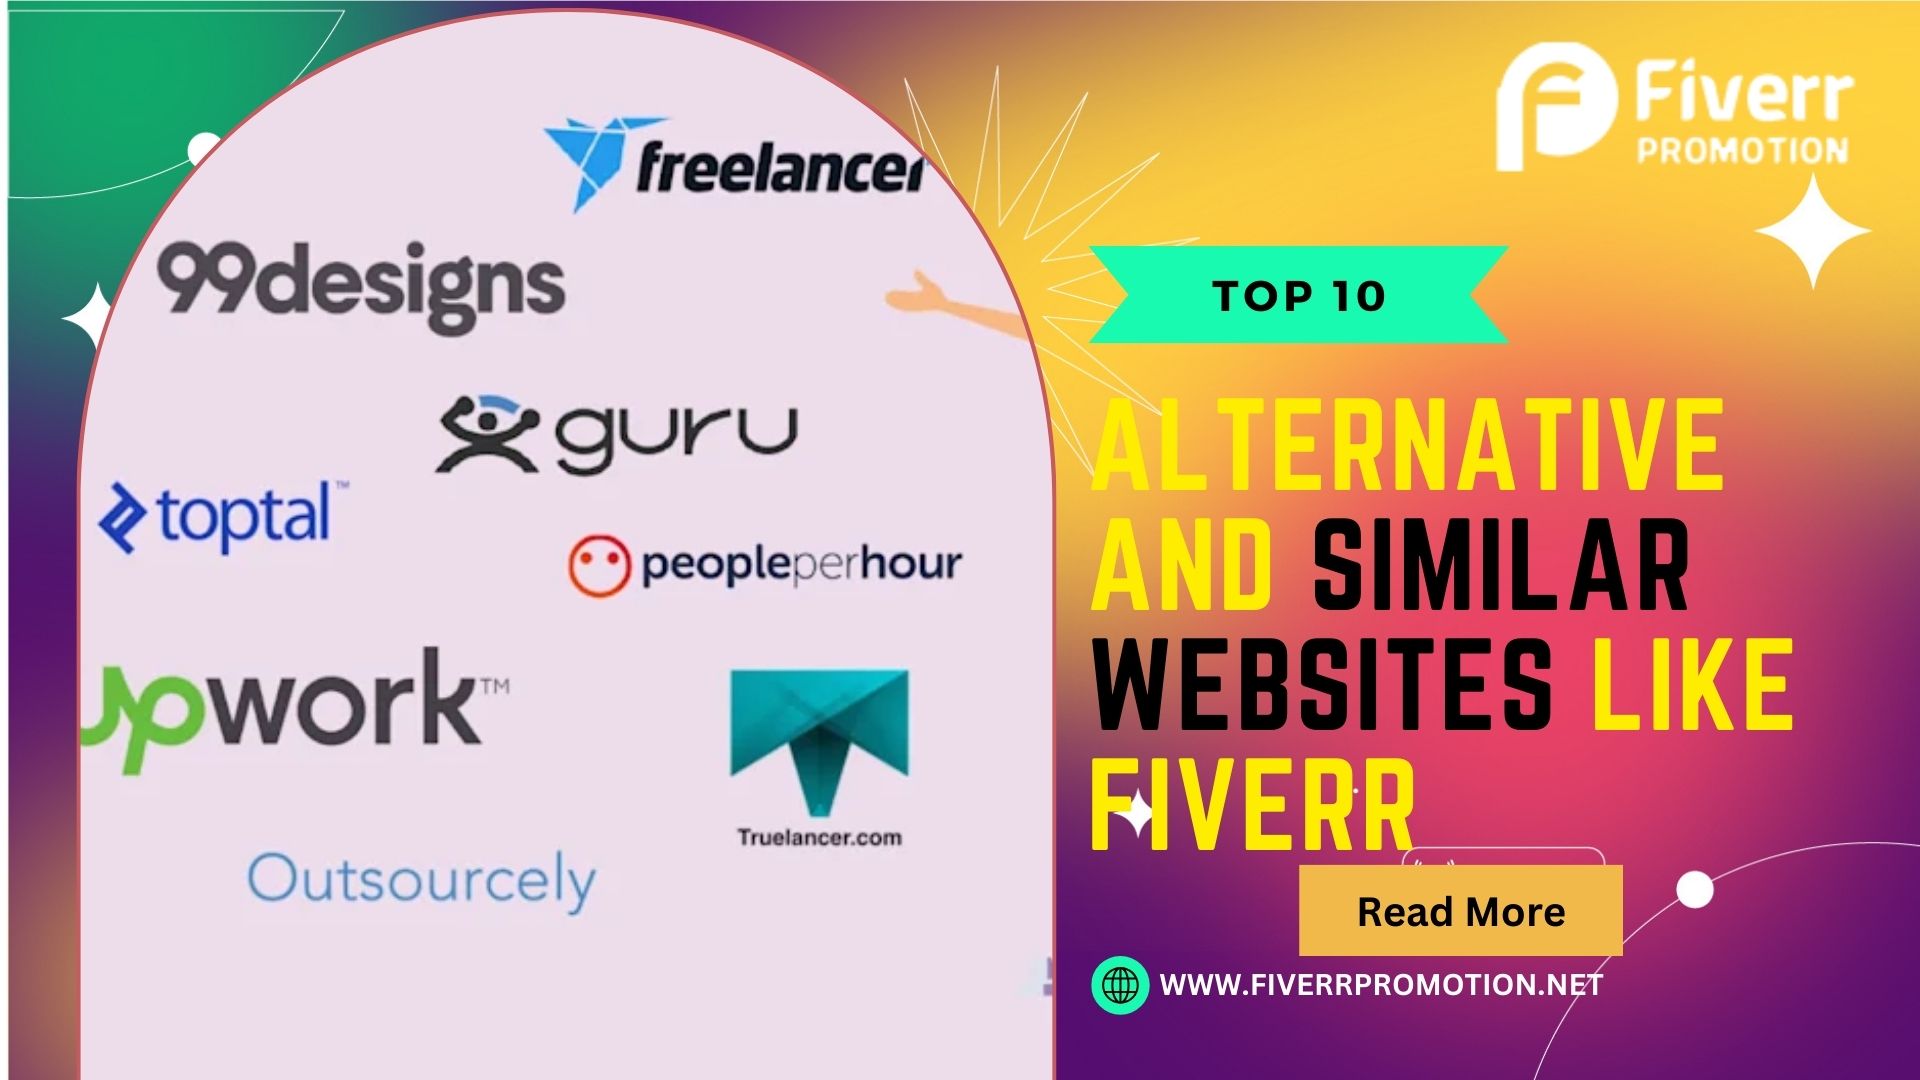 Top 10 Alternative And Similar Websites Like Fiverr